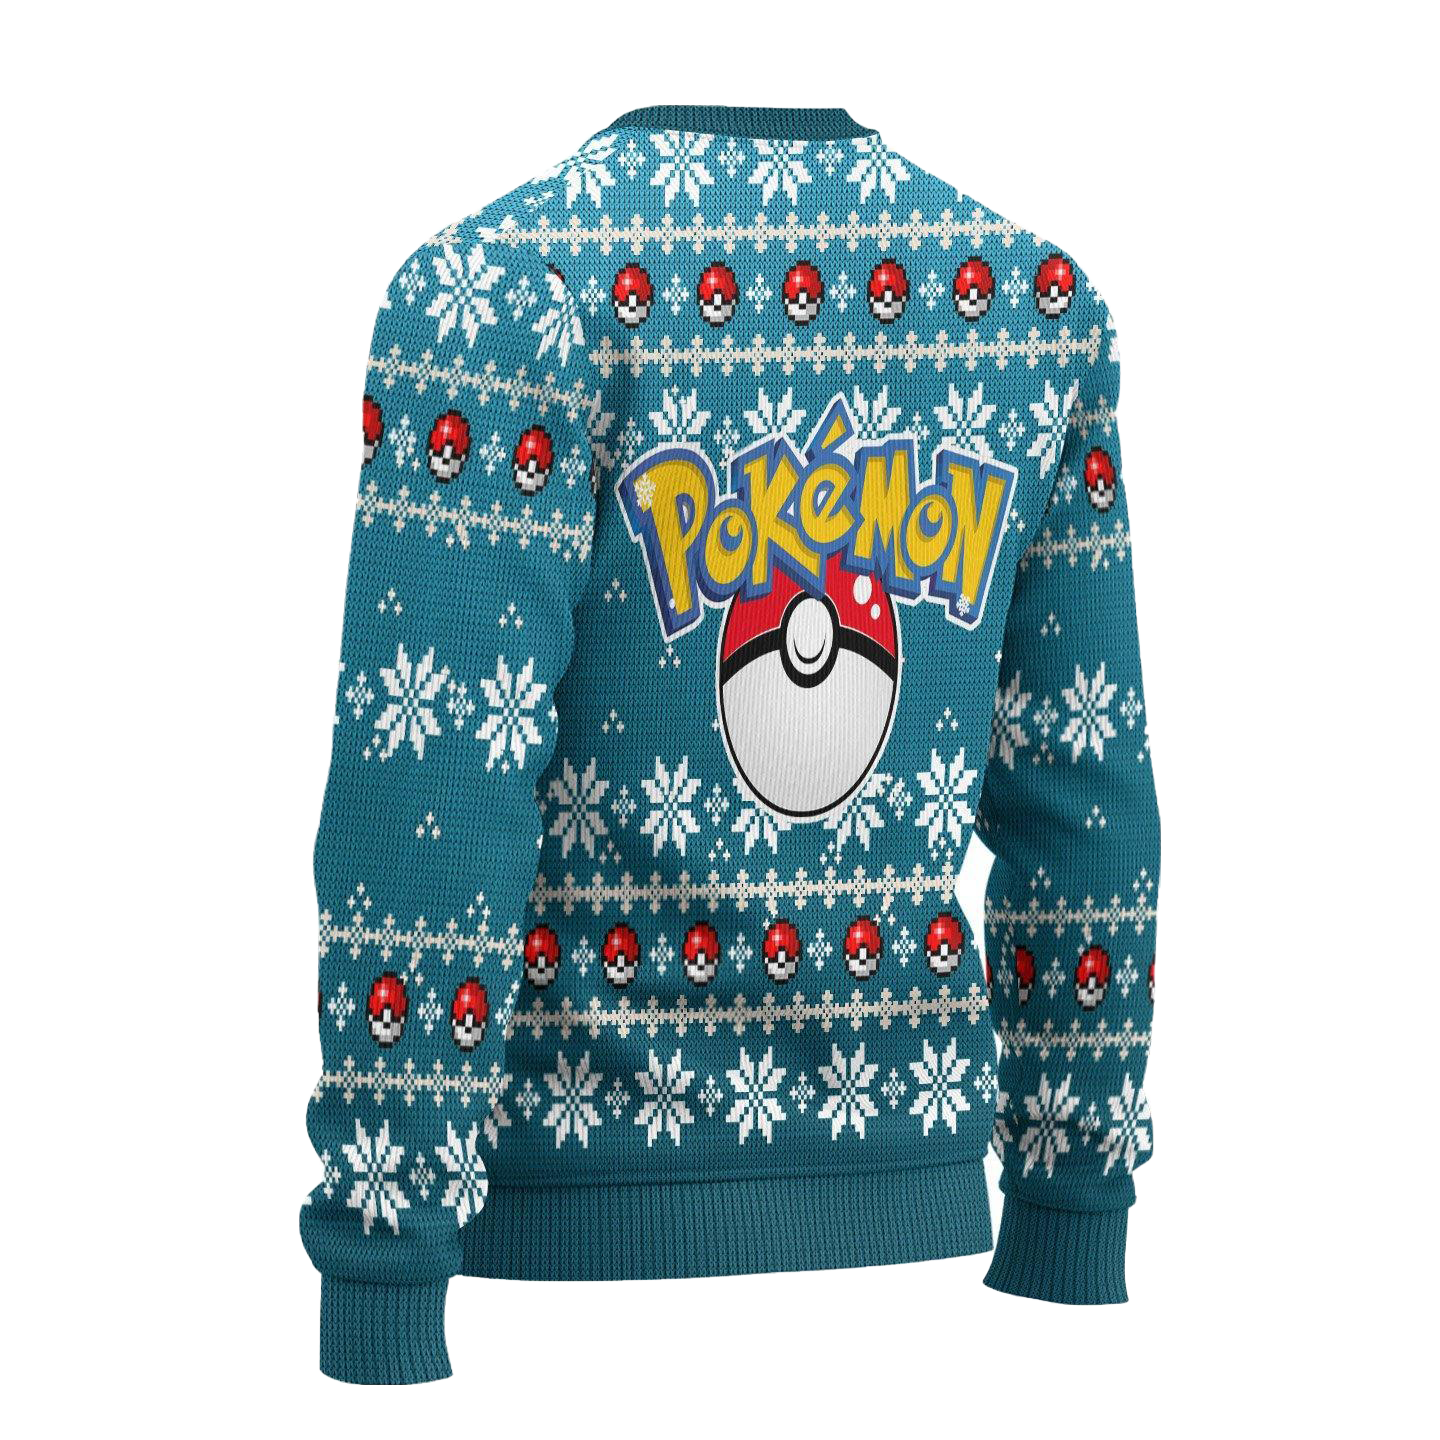 Pokemon Snorlax Anime Ugly Christmas Sweater Xmas Gift